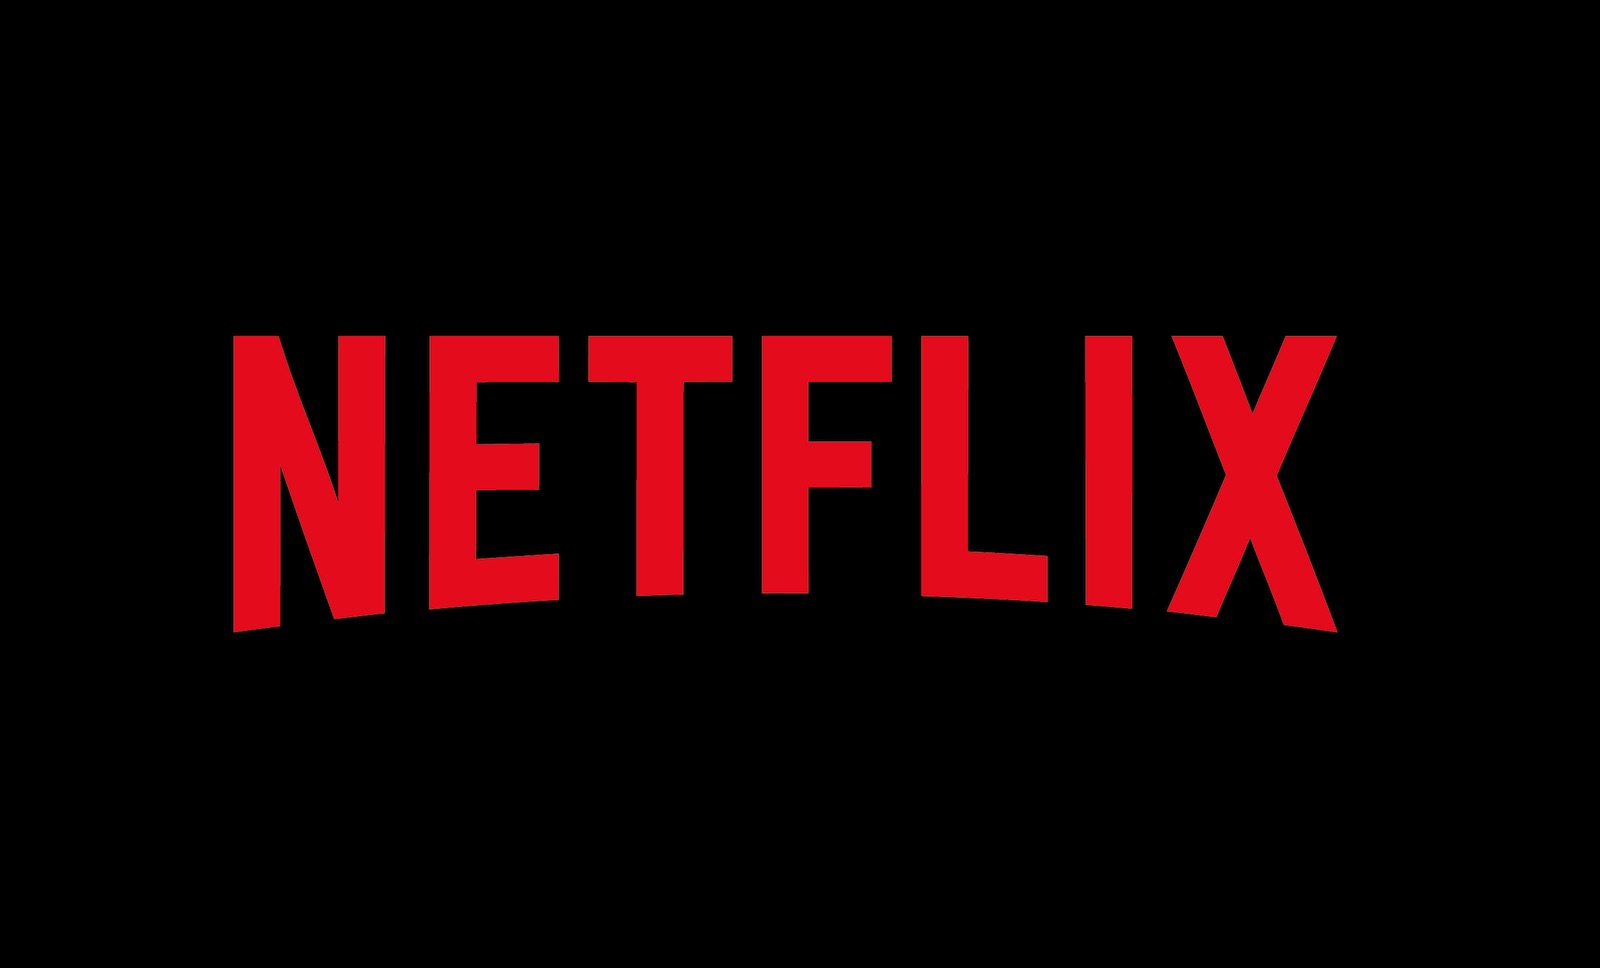 Le jeu vidéo sera-t-il le prochain eldorado de Netflix ? © Netflix